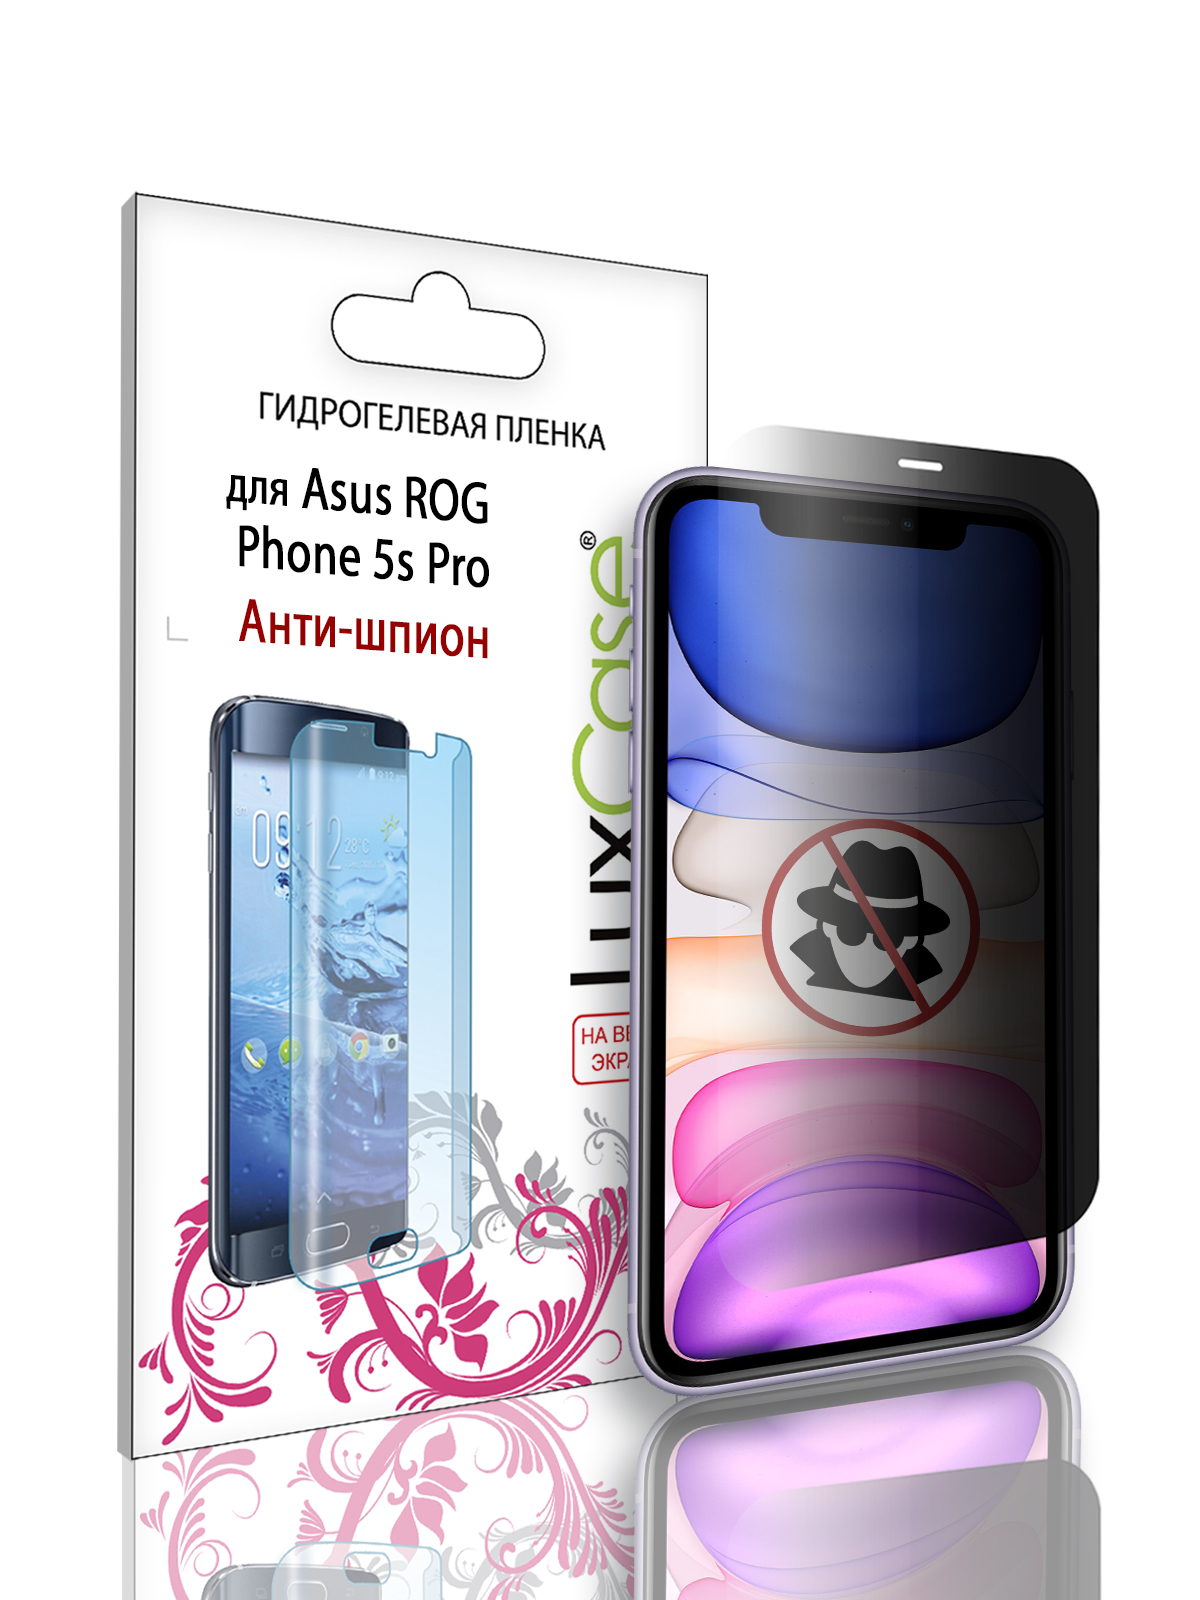 Гидрогелевая пленка LuxCase для Asus ROG Phone 5s Pro, Антишпион, 0,14 мм, Front гидрогелевая защитная пленка антишпион anty spy анти шпион для sigma x treme pq39 матовая